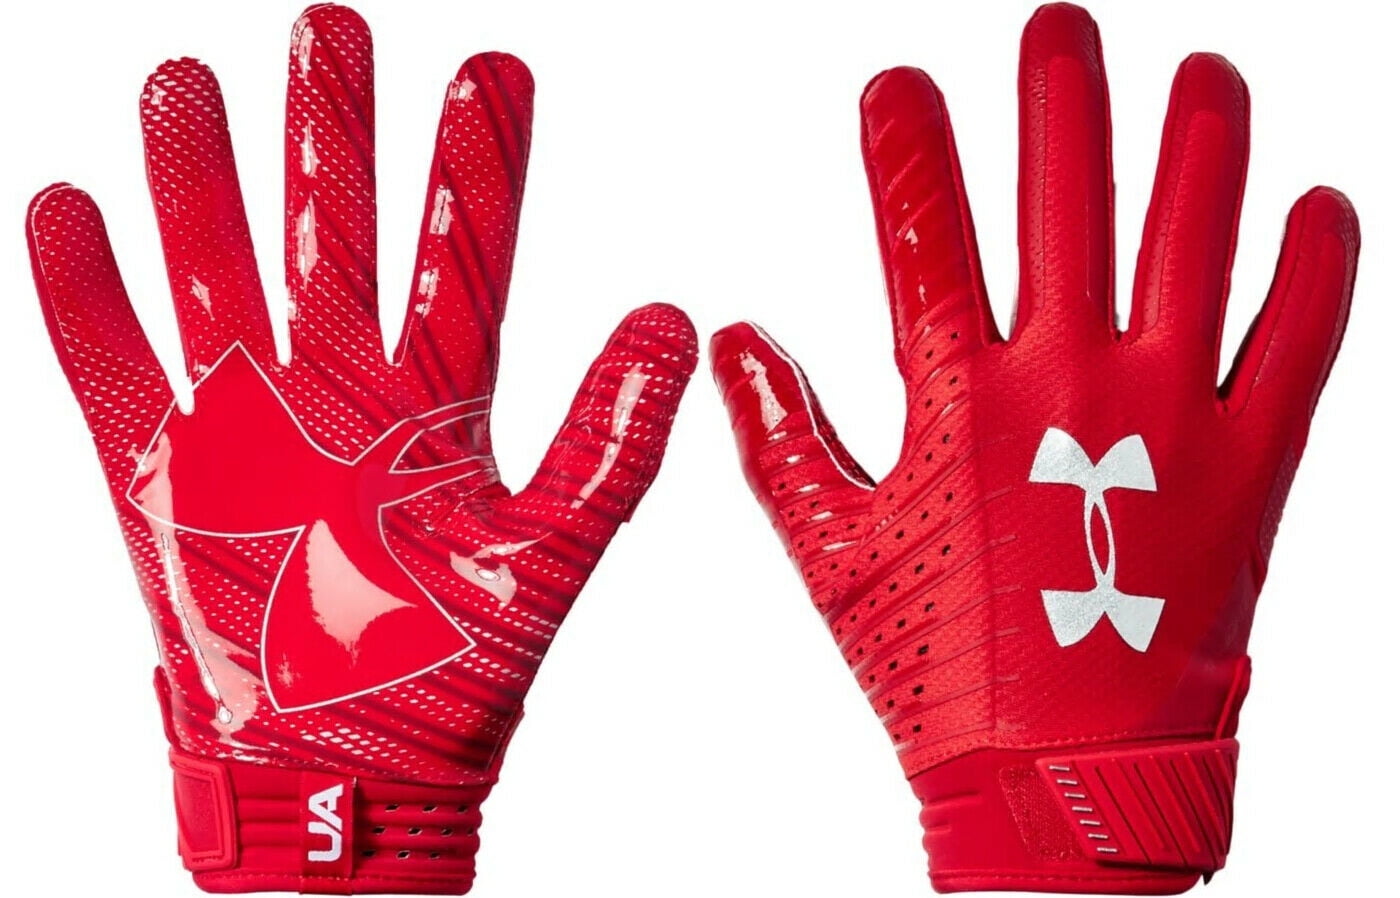 Under Armour Men's UA Spotlight NFL Football Receiver Gloves 1326218-600 Red